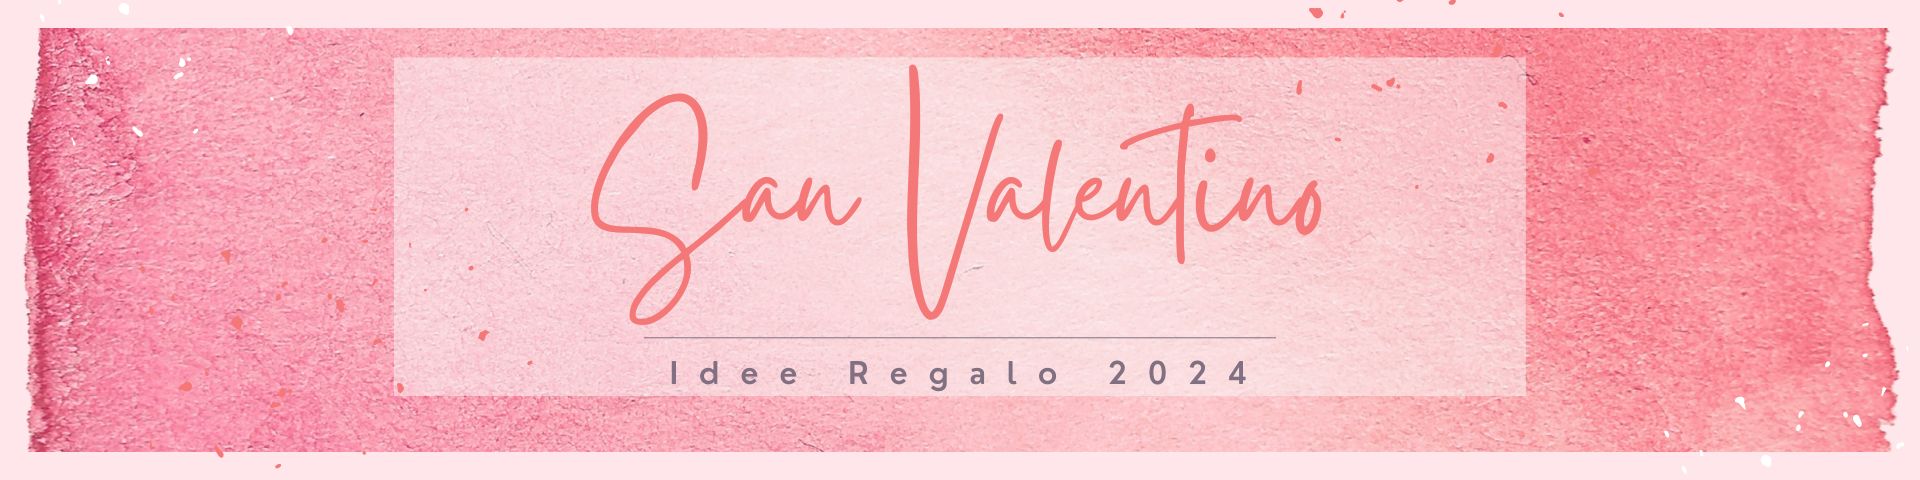 San Valentino 2022